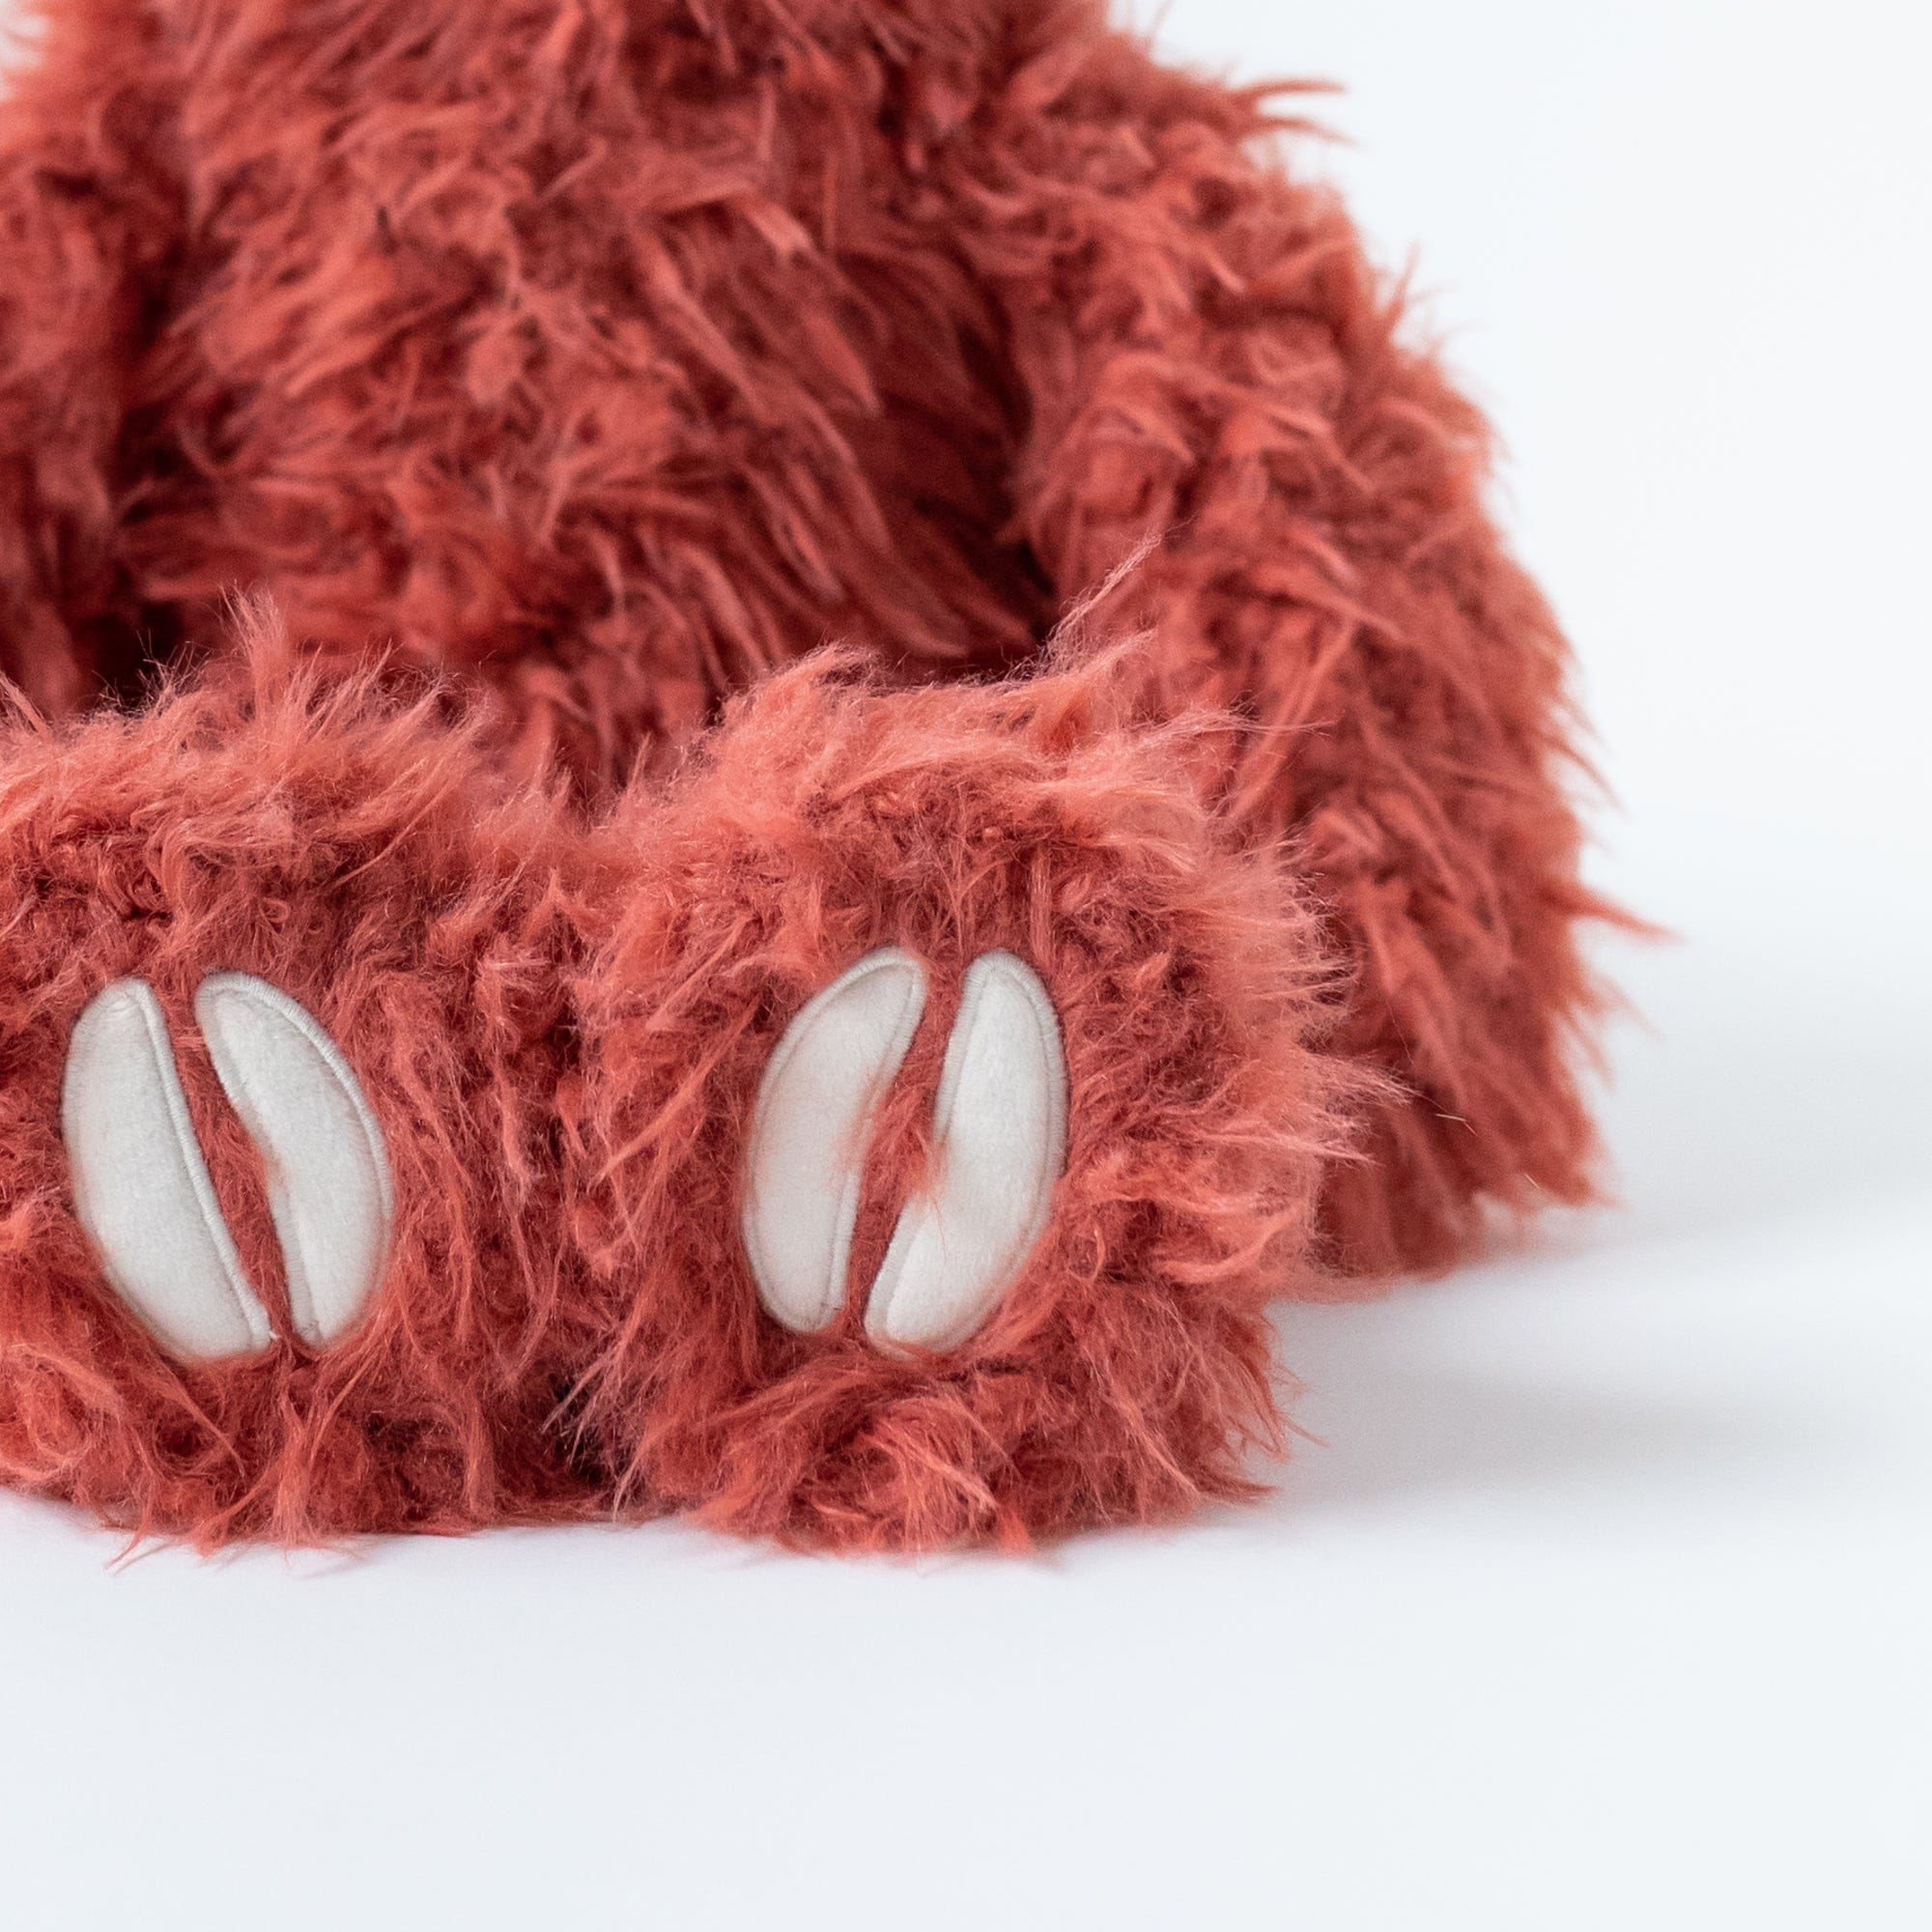 Close up of feet of ultra-plush Alpaca stuffed animal - View Product